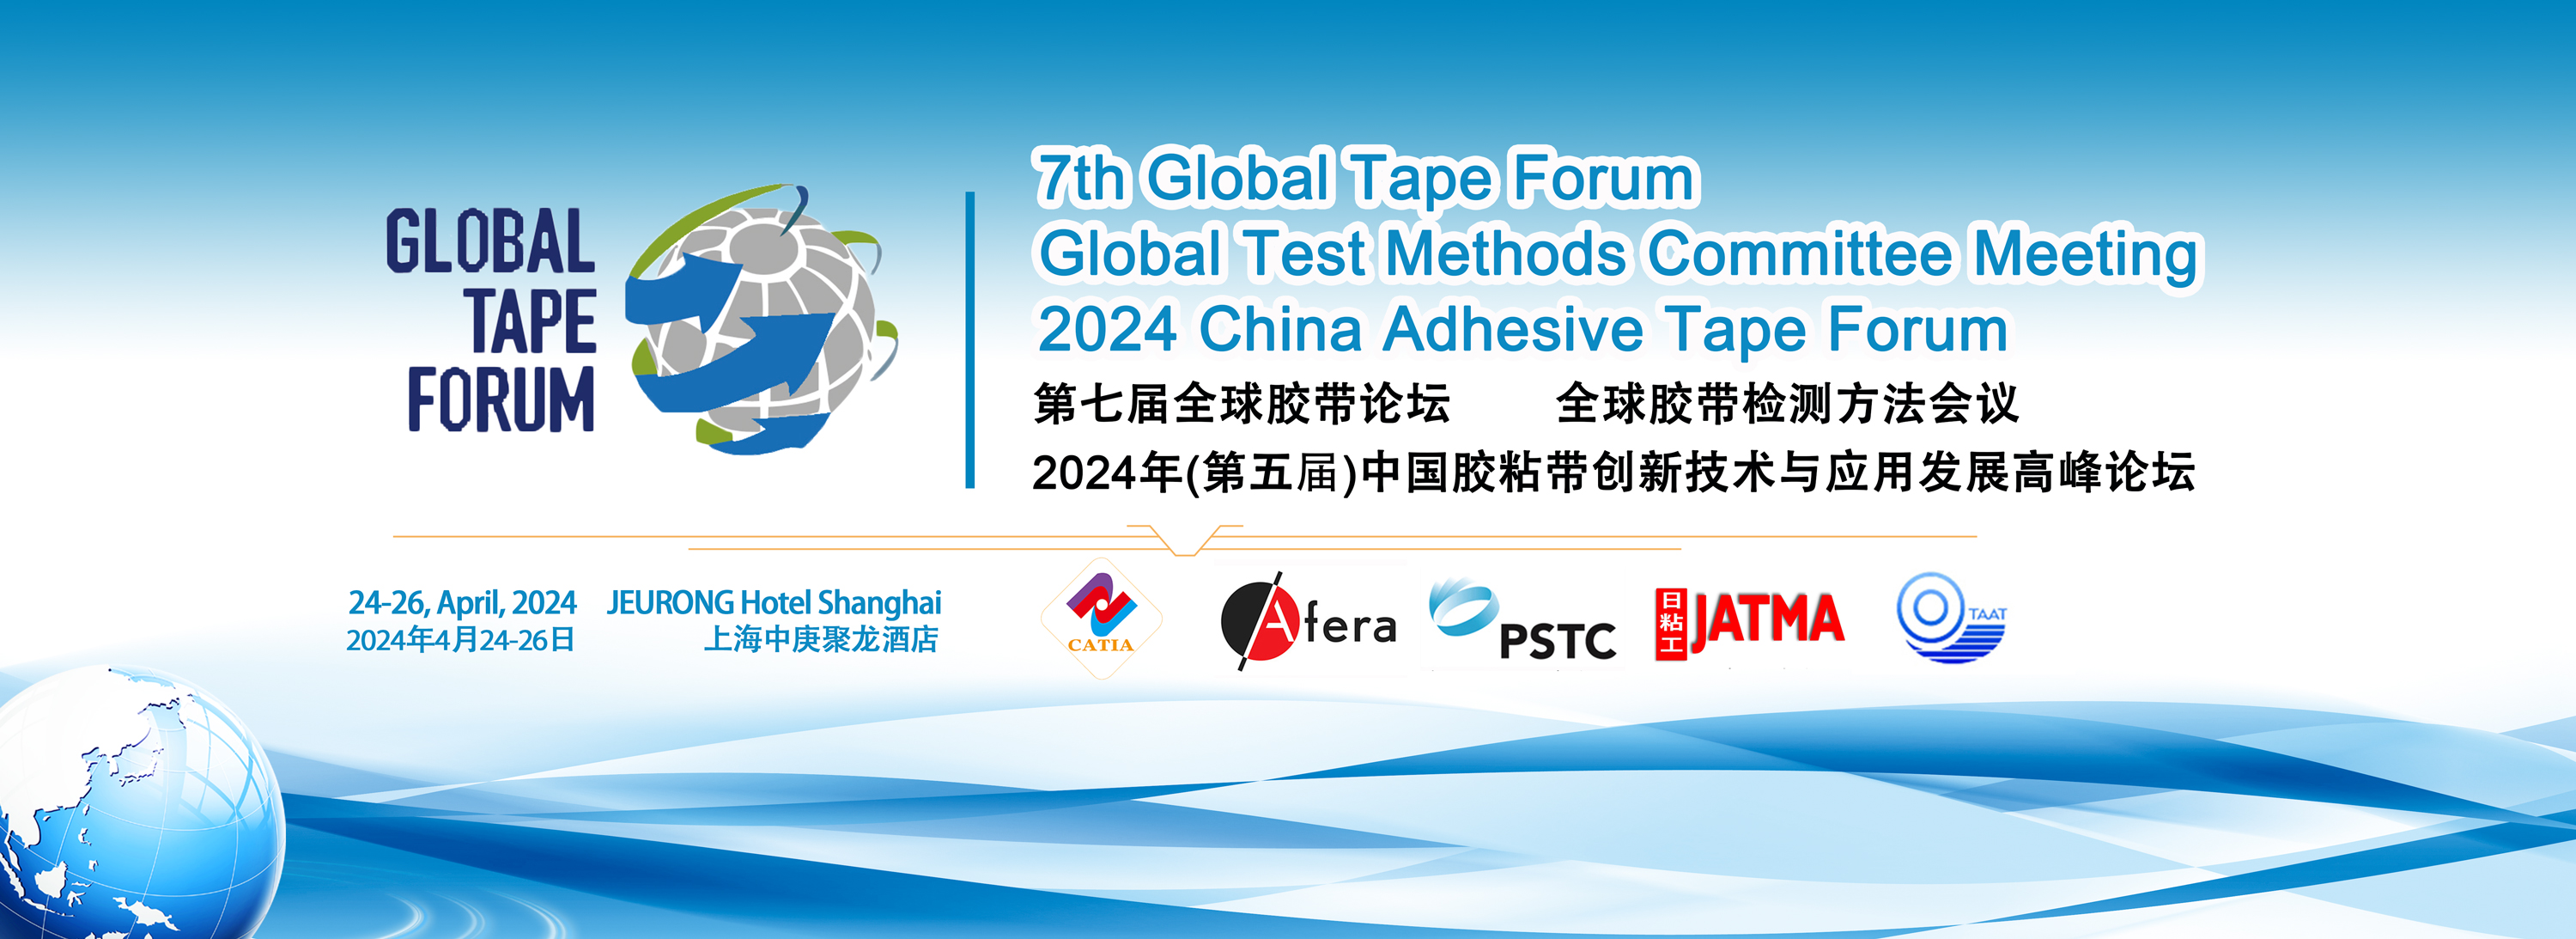 7th Global Tape Forum/Global Test Methods Committee Meeting & 2024 China Adhesive Tape Forum